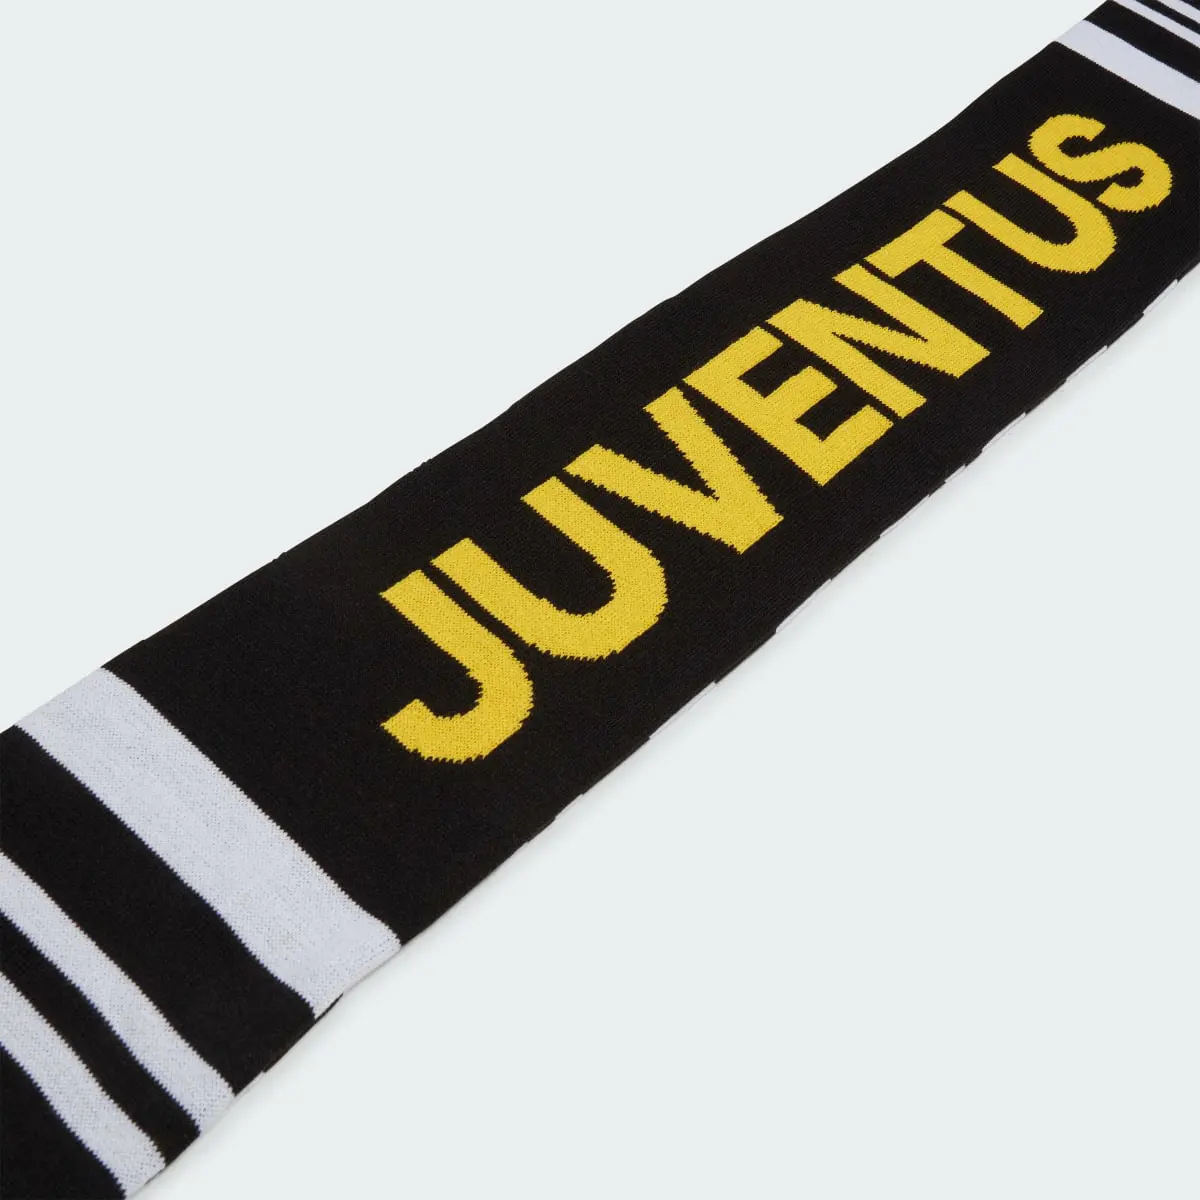 Adidas Juventus Turin Schal. 3